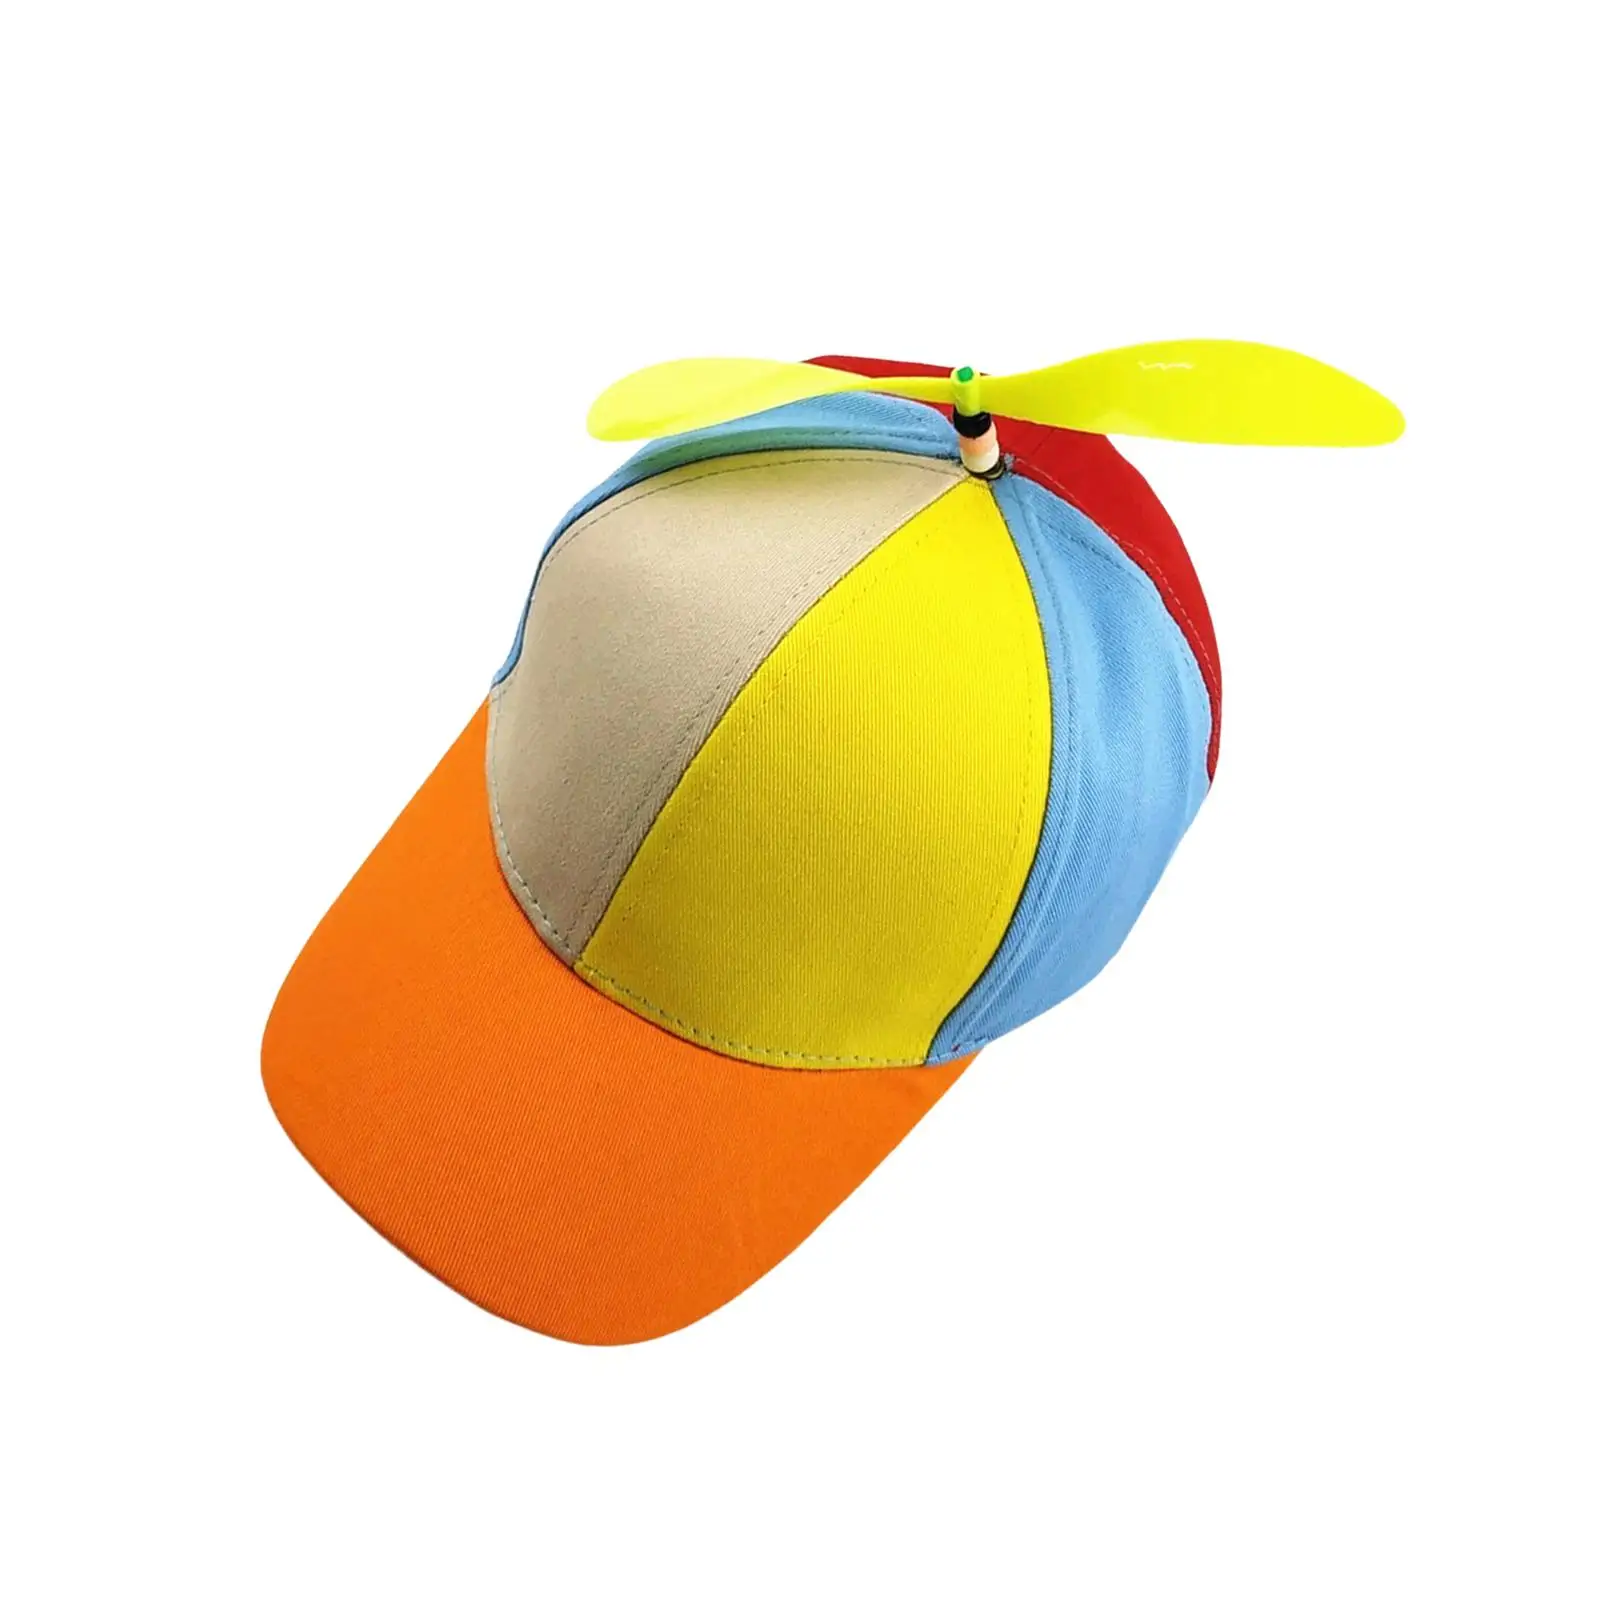 Funny Propeller Hat Novelty Baseball Cap for Fancy Dress Camping Costume